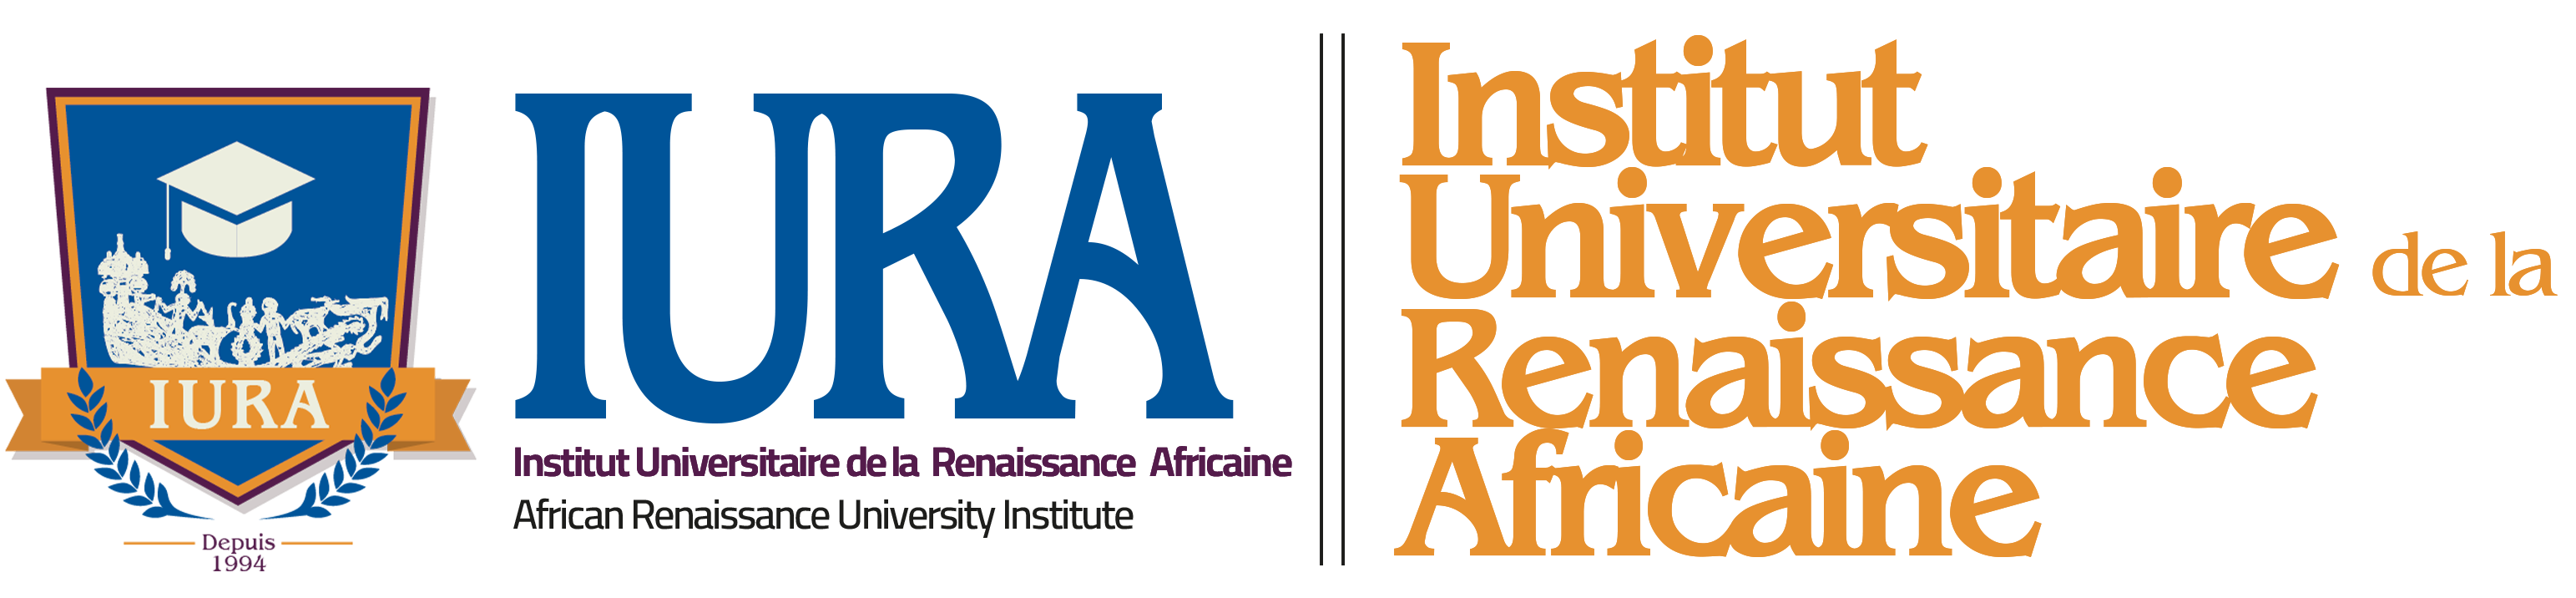 African Renaissance University Institute